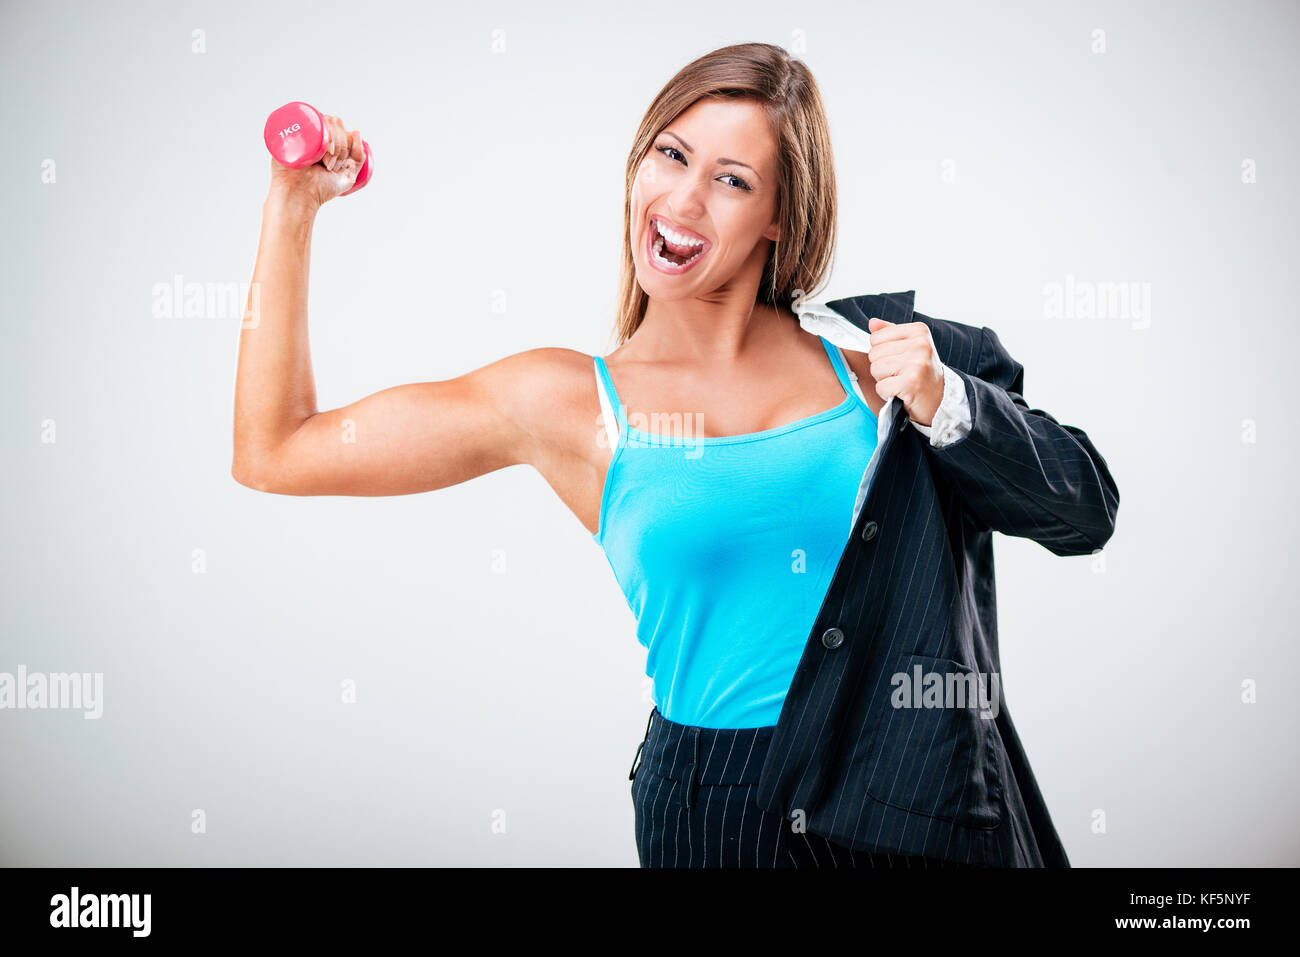 Multitasking businesswoman balancing life work and fitness. Stock Photo